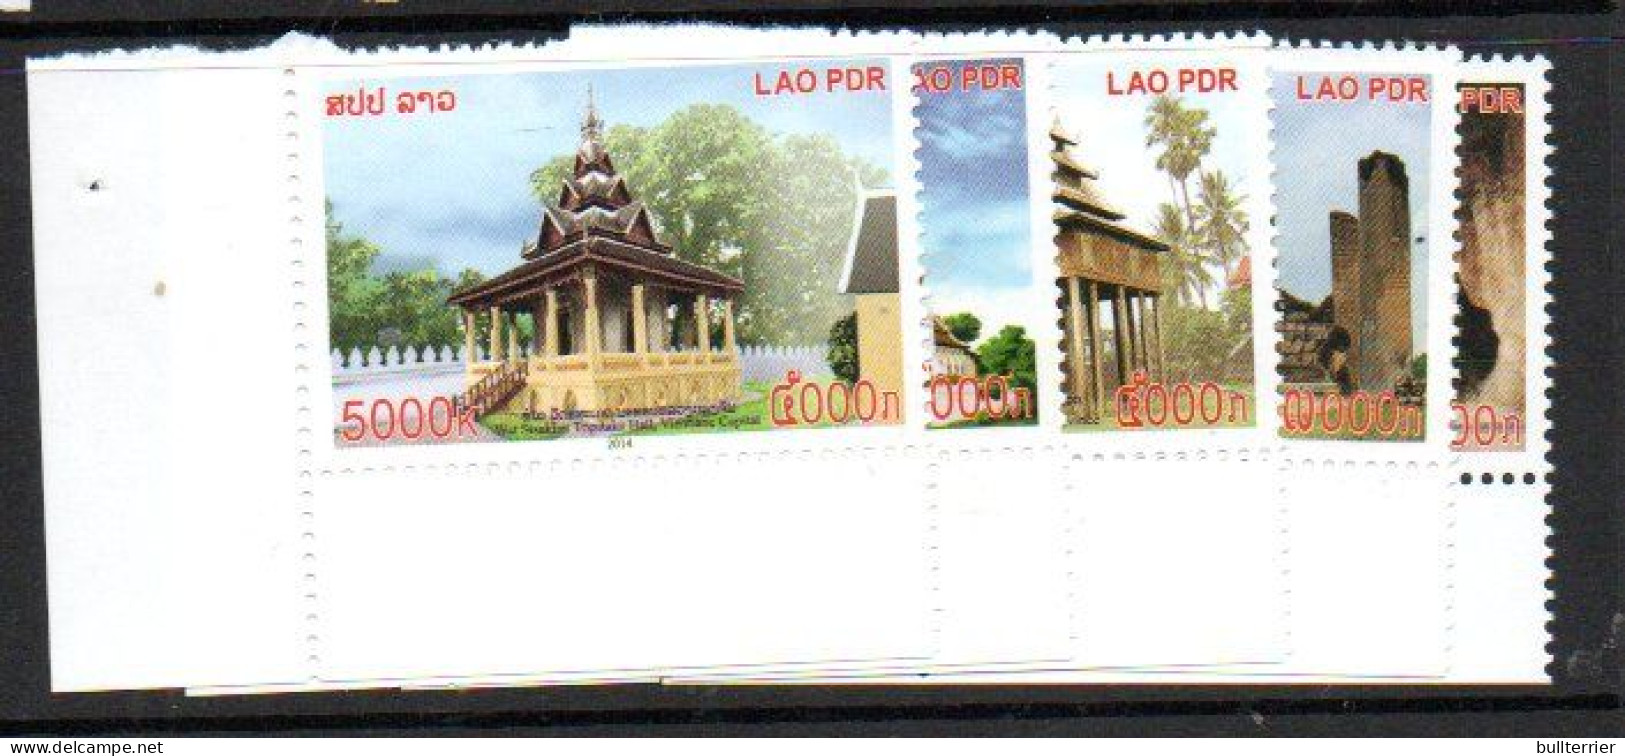 LAOS - 2014 - ANTIQUITIES SET OF 5  MINT NEVER HINGED - Laos